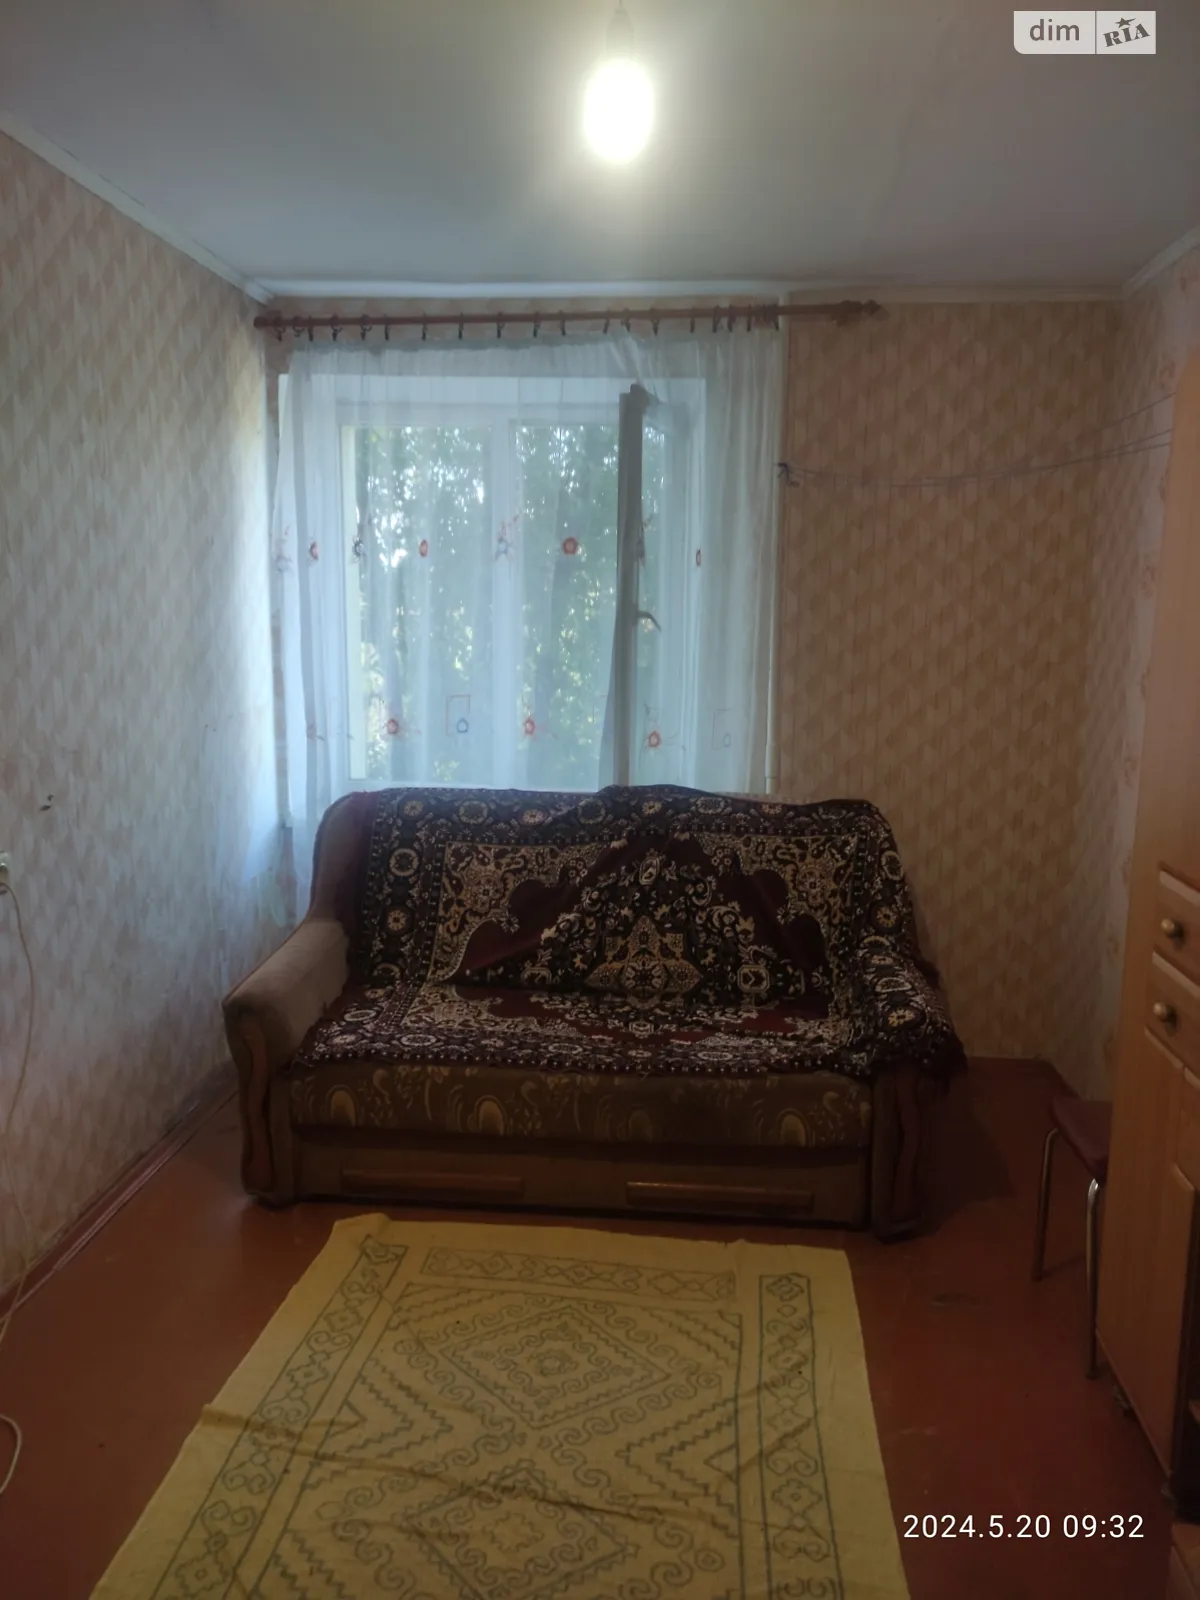 Продается комната 15.5 кв. м в Ровно, цена: 8000 $